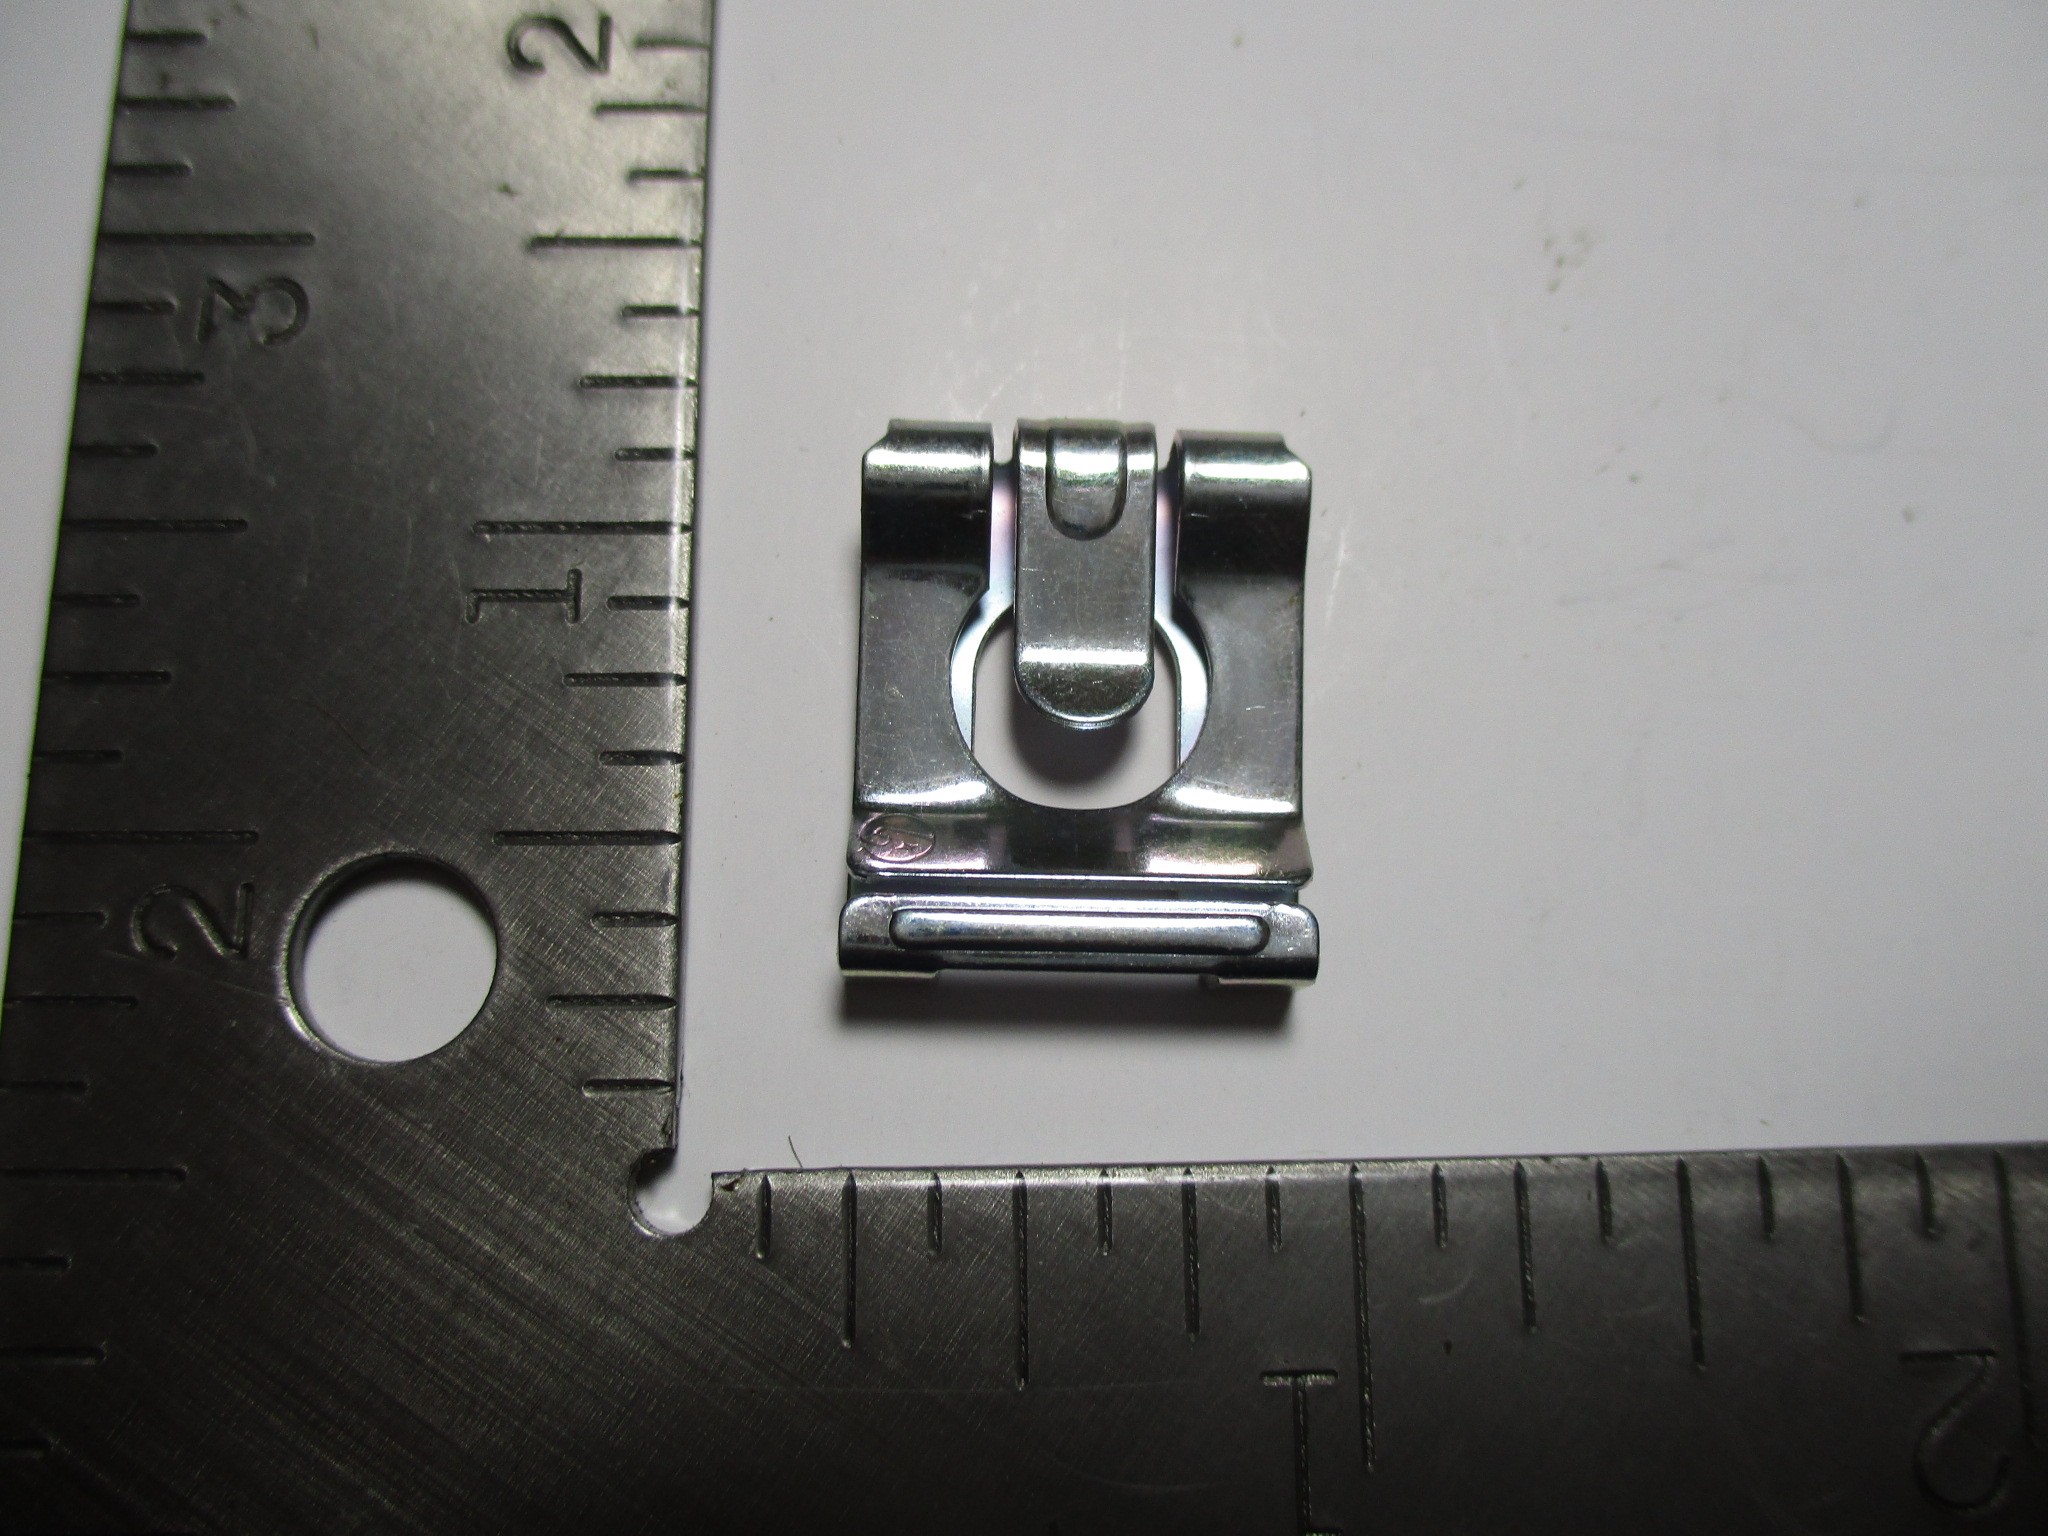 shifter lever clip